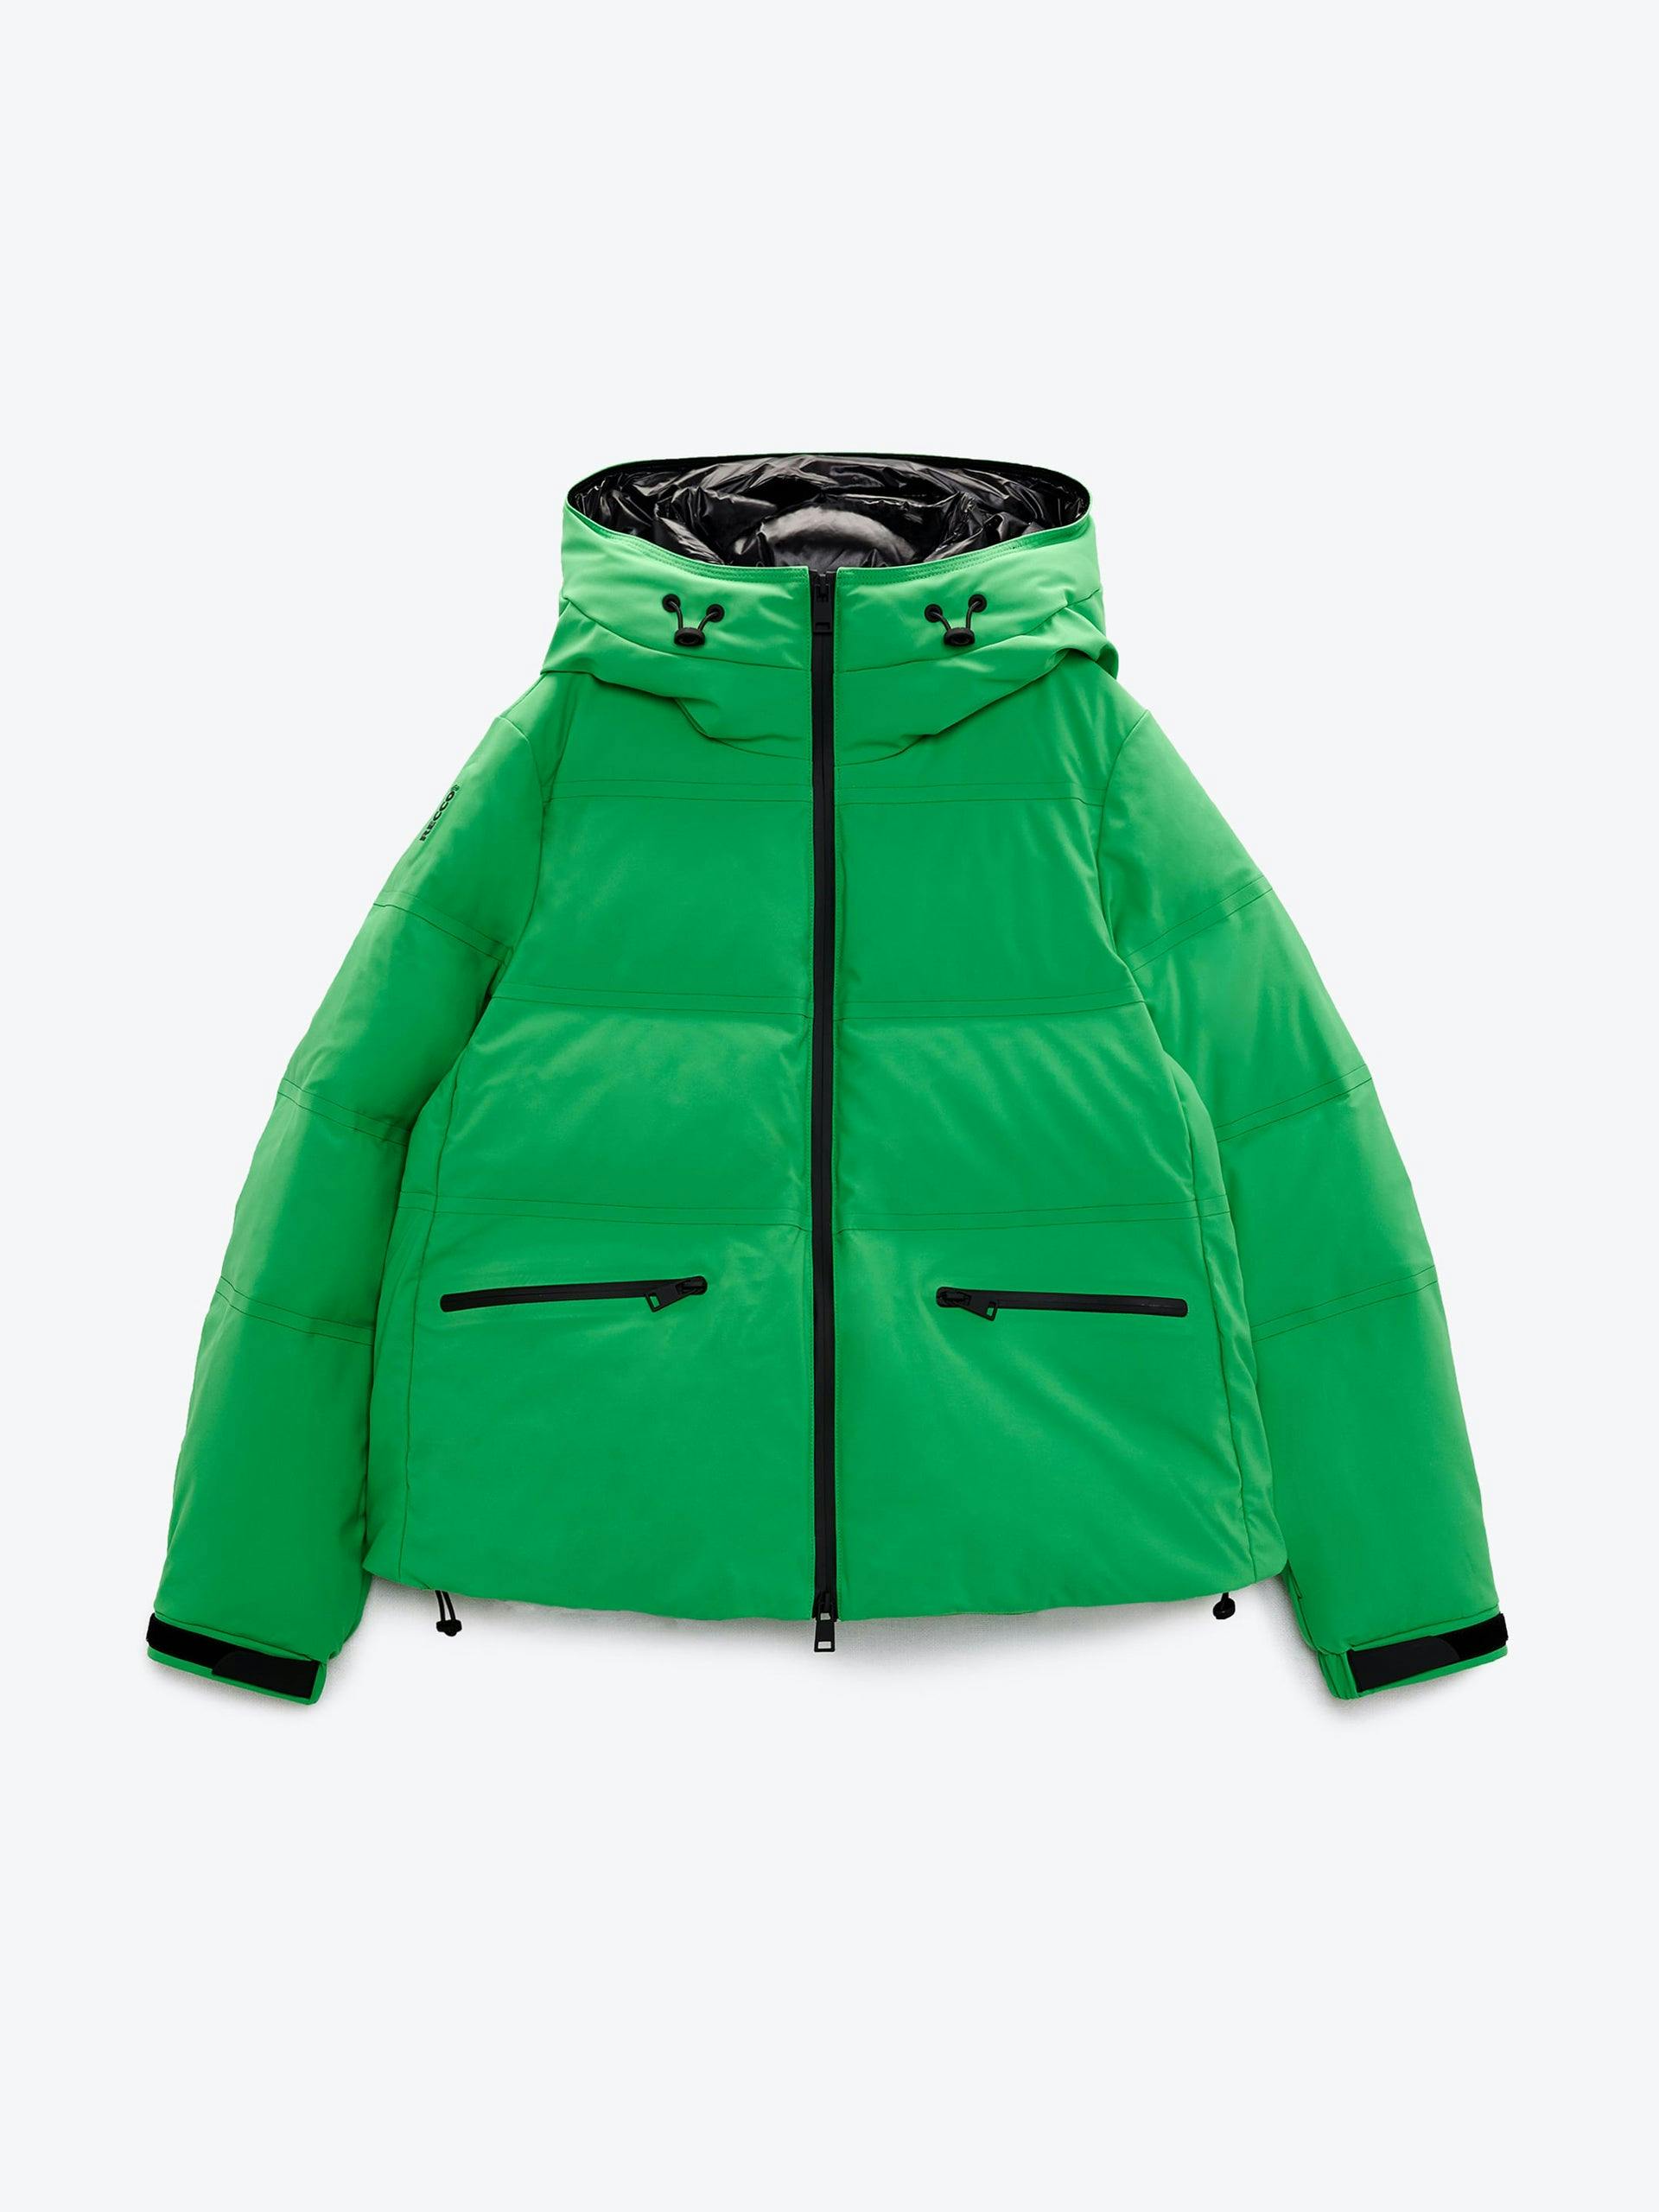 Bright green waterproof down jacket